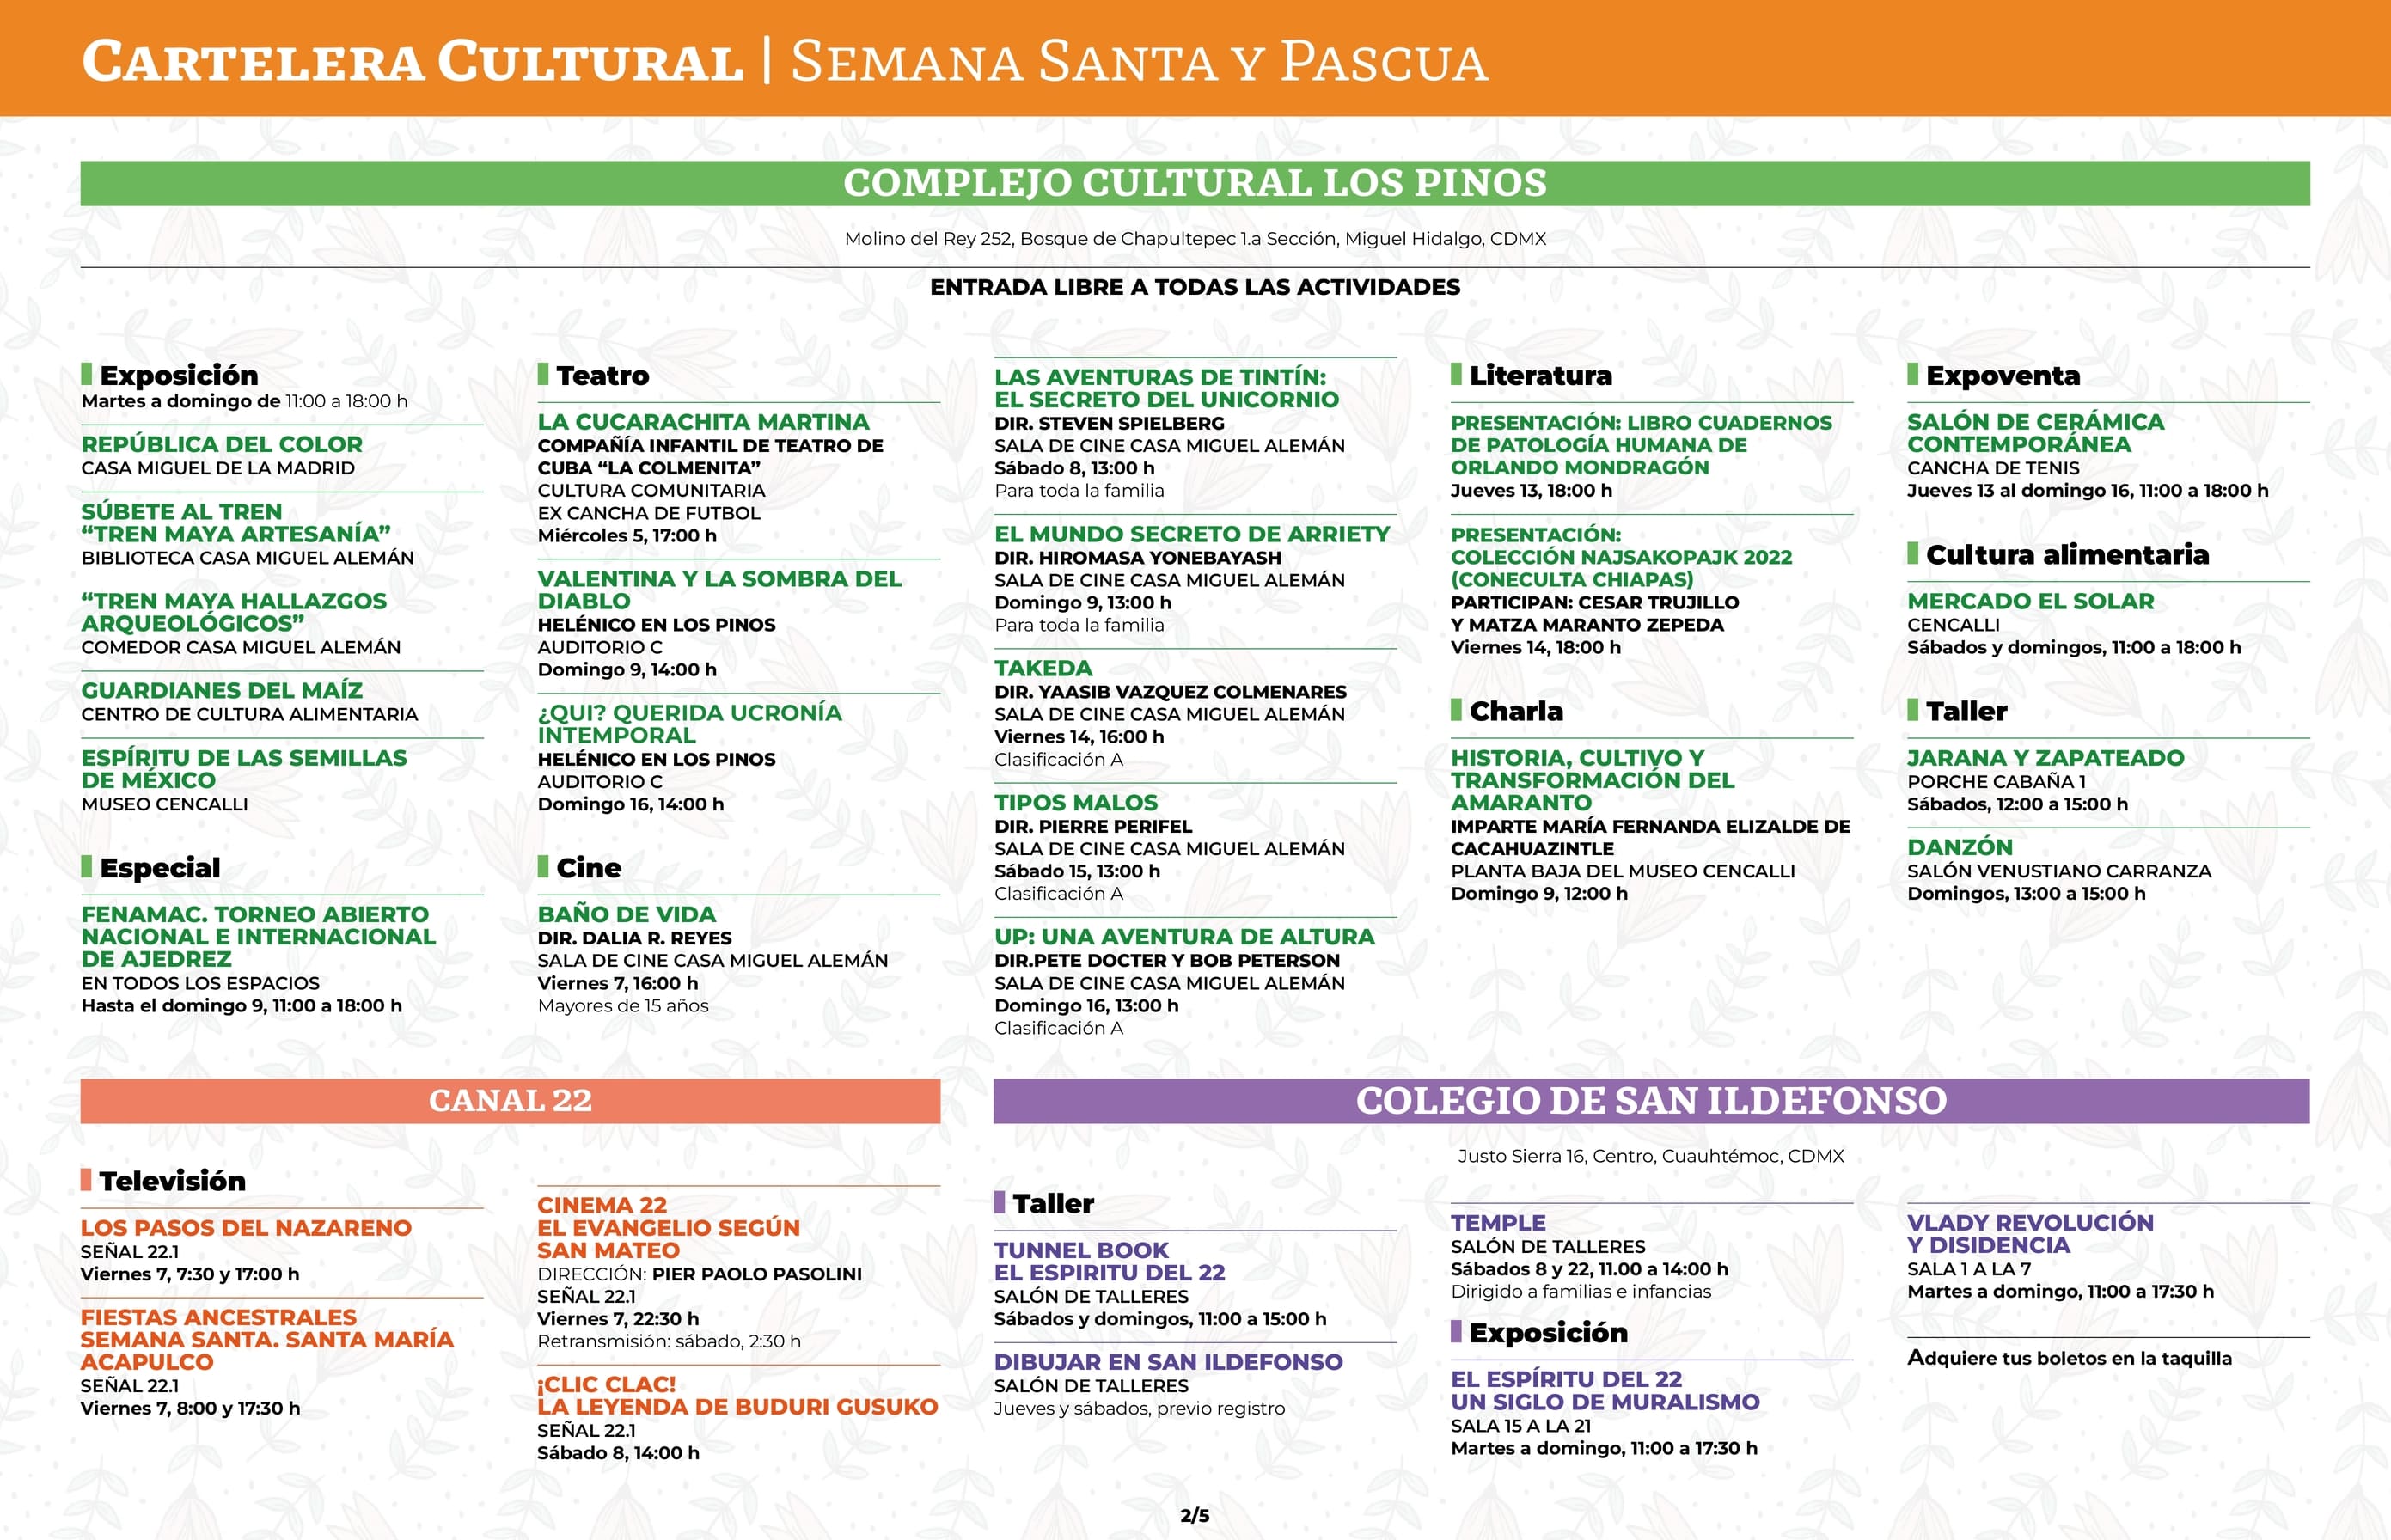 /cms/uploads/image/file/794707/Cartelera_Cultural_-_Semana_Santa_-_segunda_versio_n_page-0002.jpg